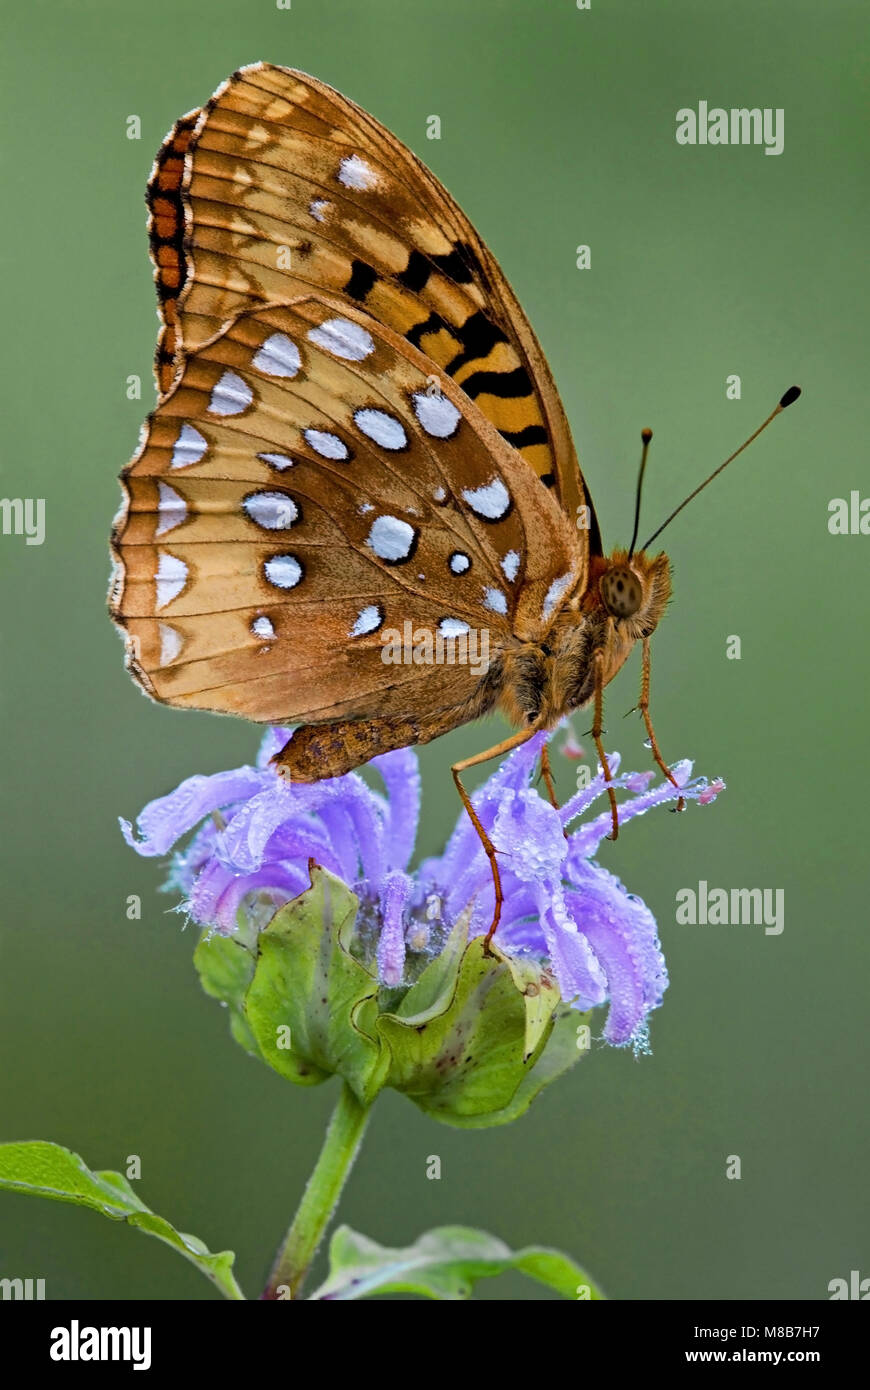 Great Spangled Fritillary Butterfly (Speyeria cybele) sur la monarde fistuleuse (Monarda fistulosa) est des États-Unis, par aller Moody/Dembinsky Assoc Photo Banque D'Images